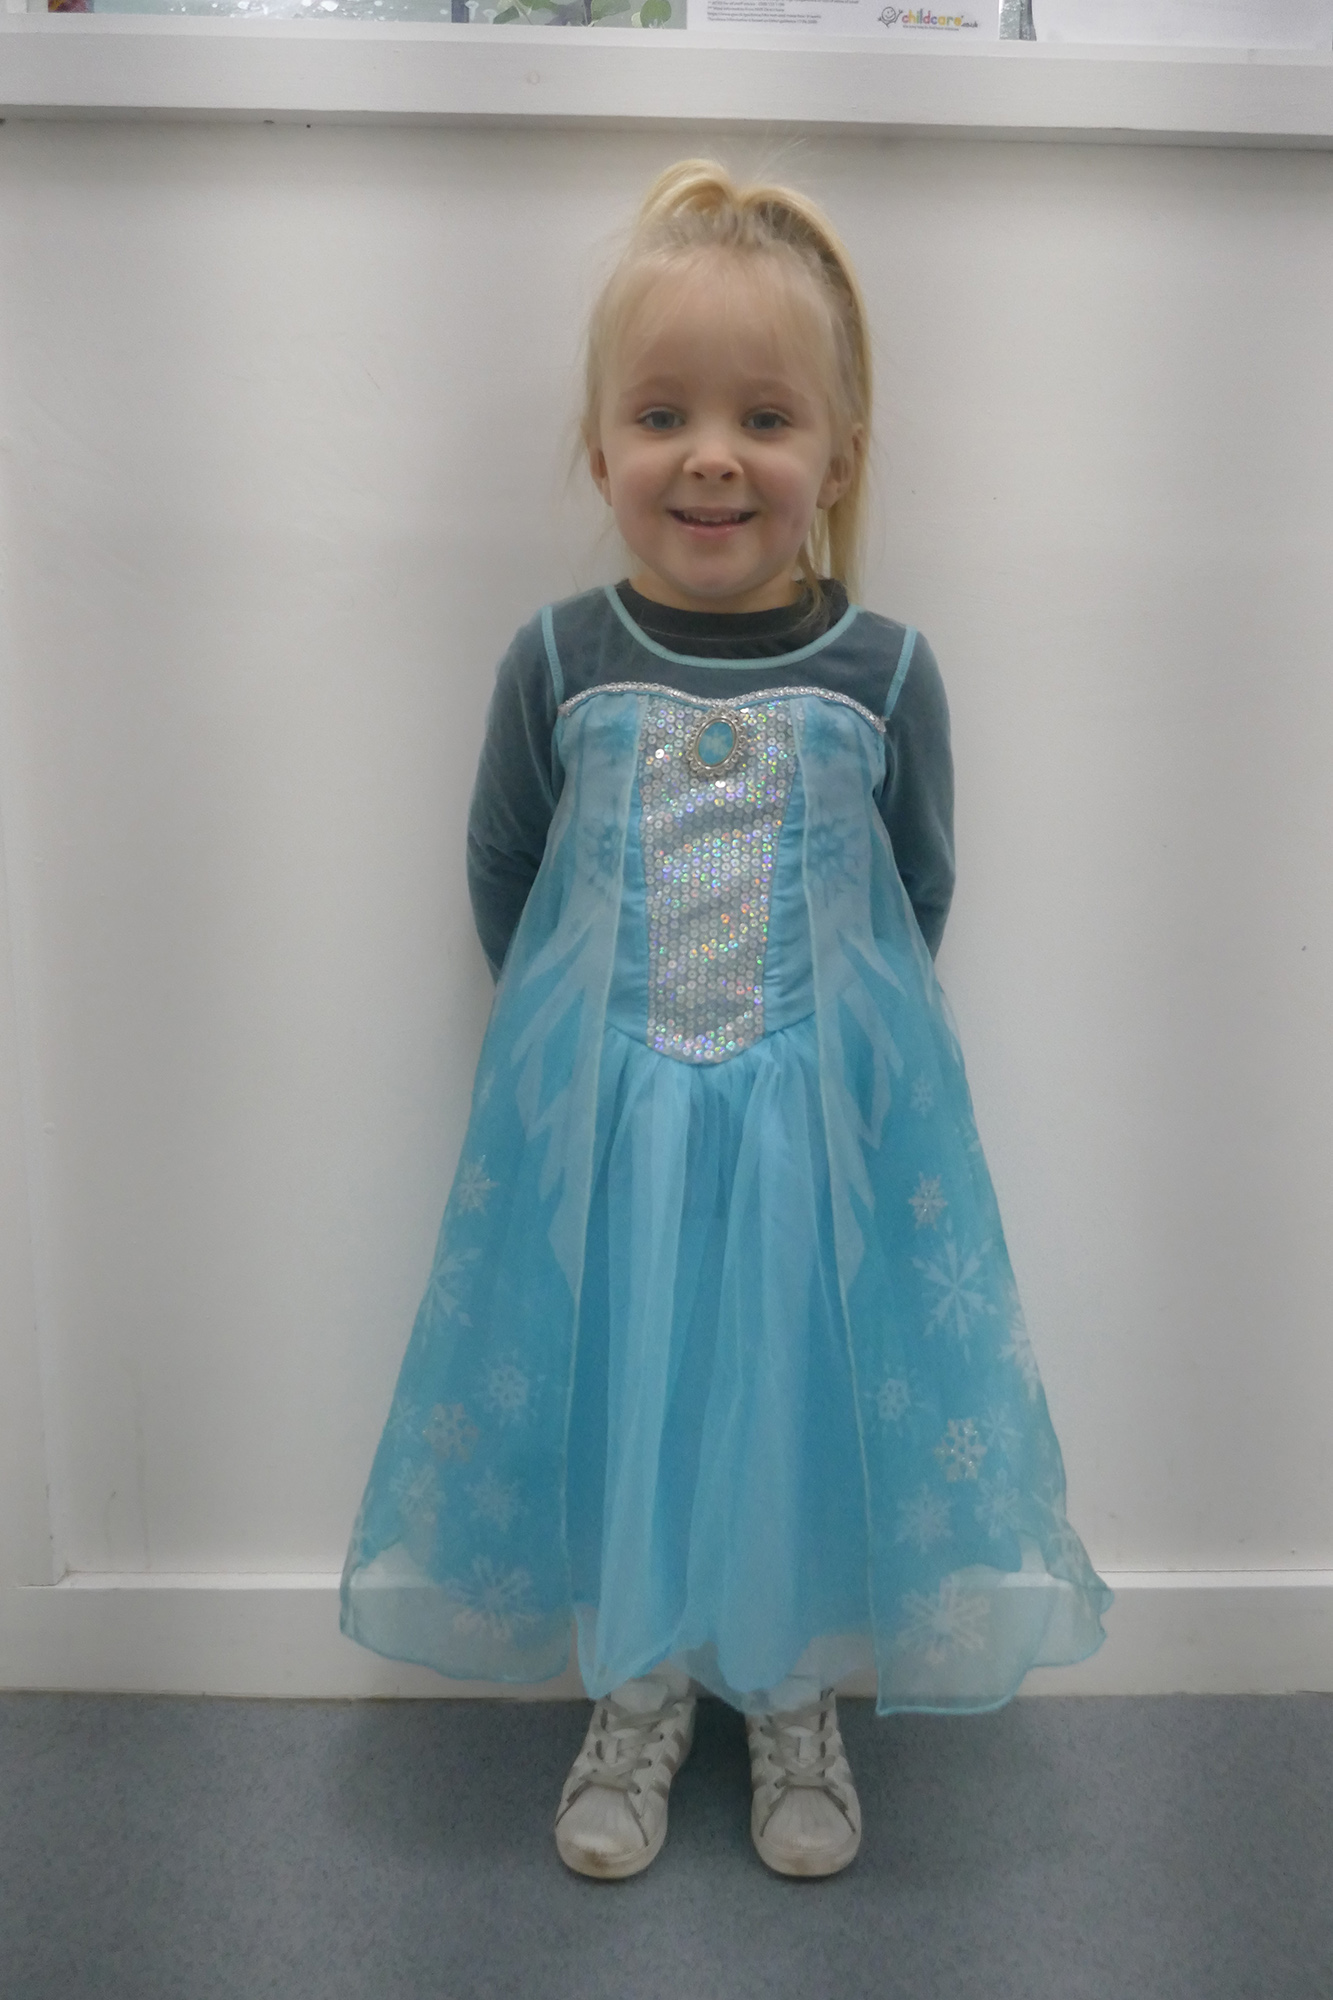 Child dressed as Elsa